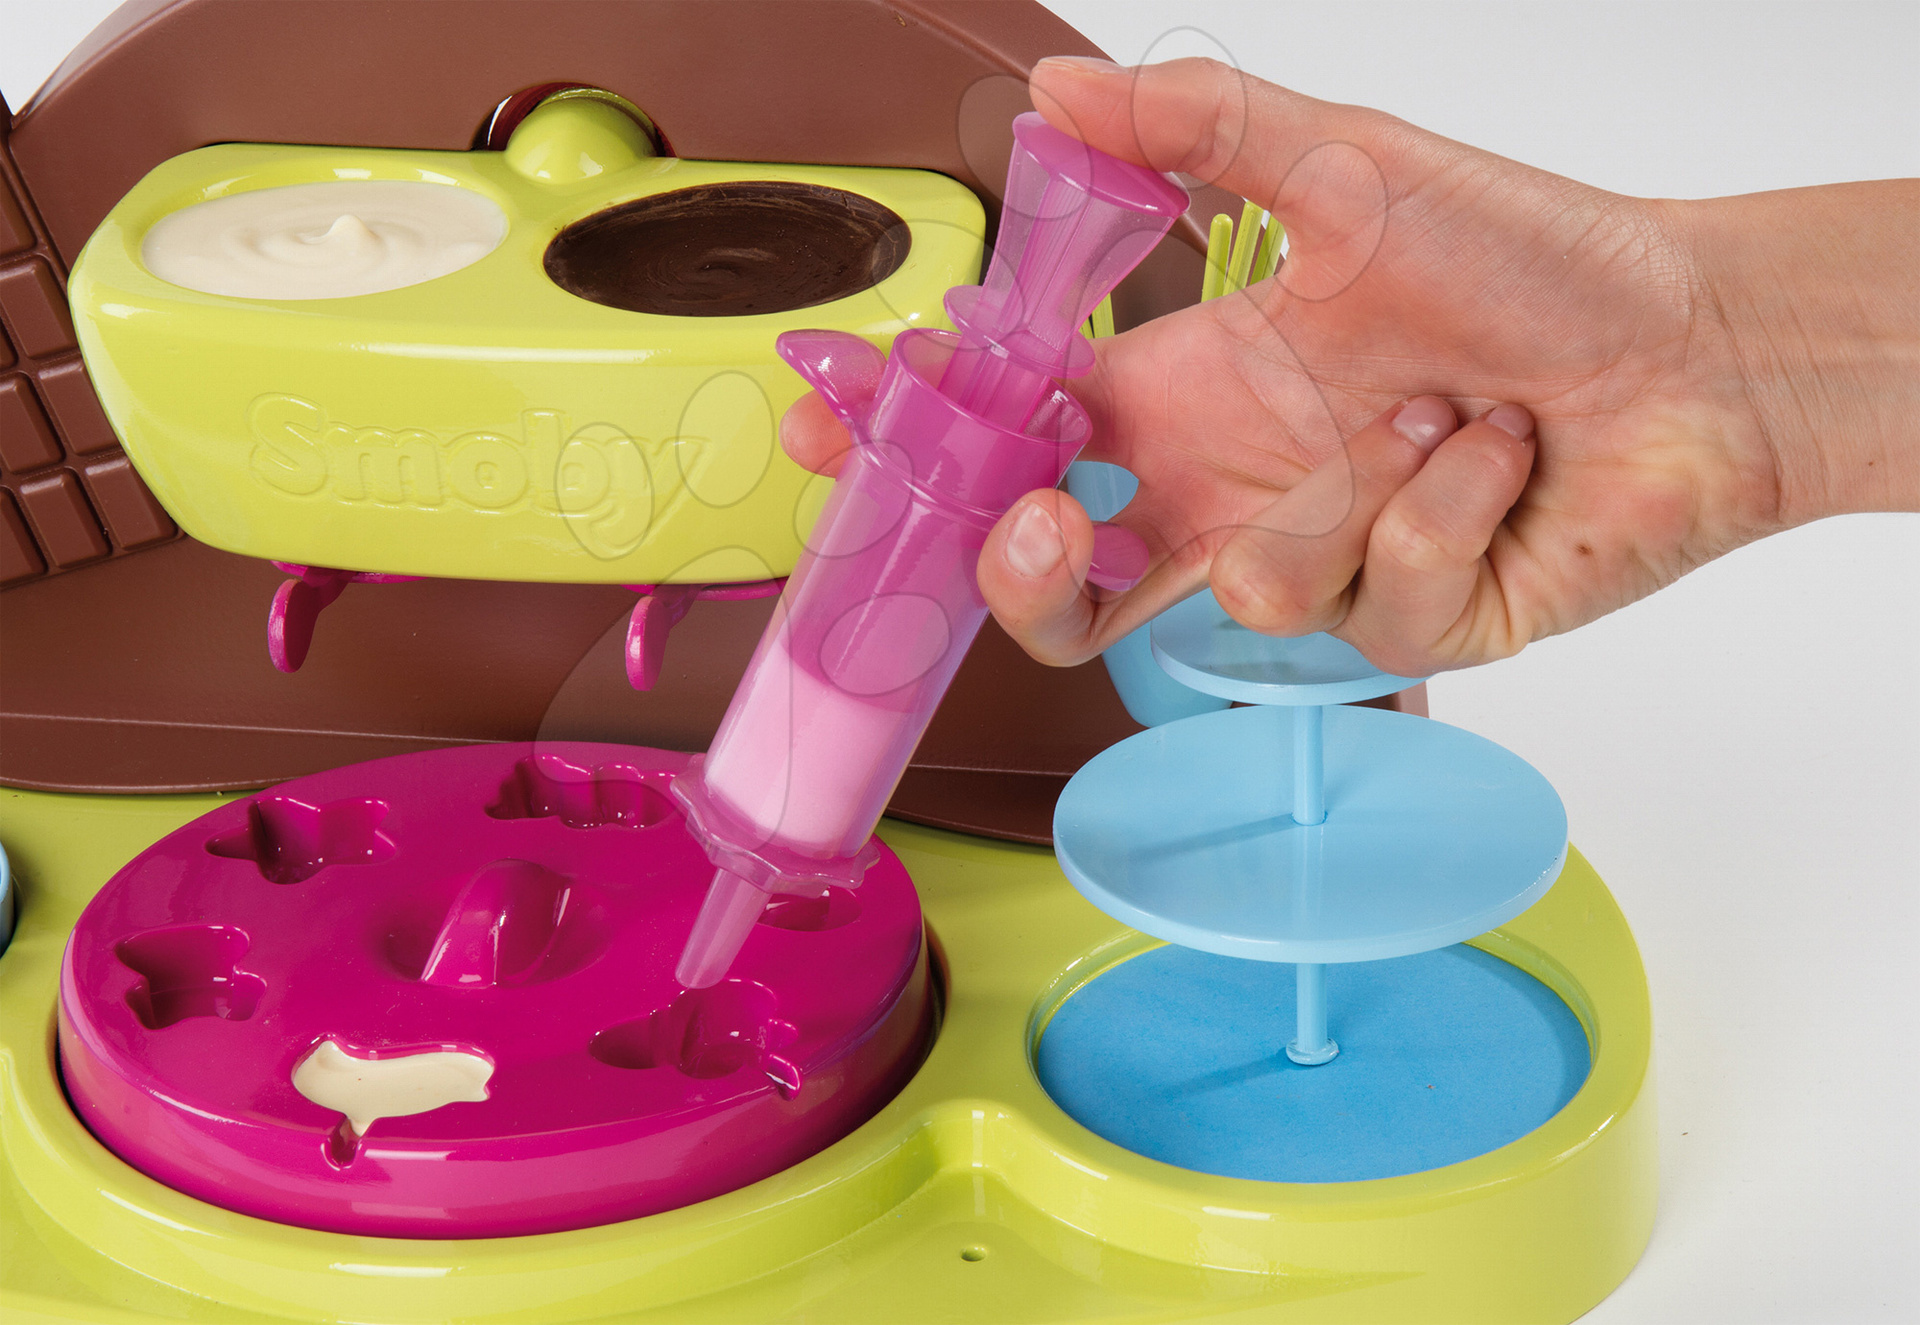 Smoby Toys: Karcher K4 Pressure Washer Toy